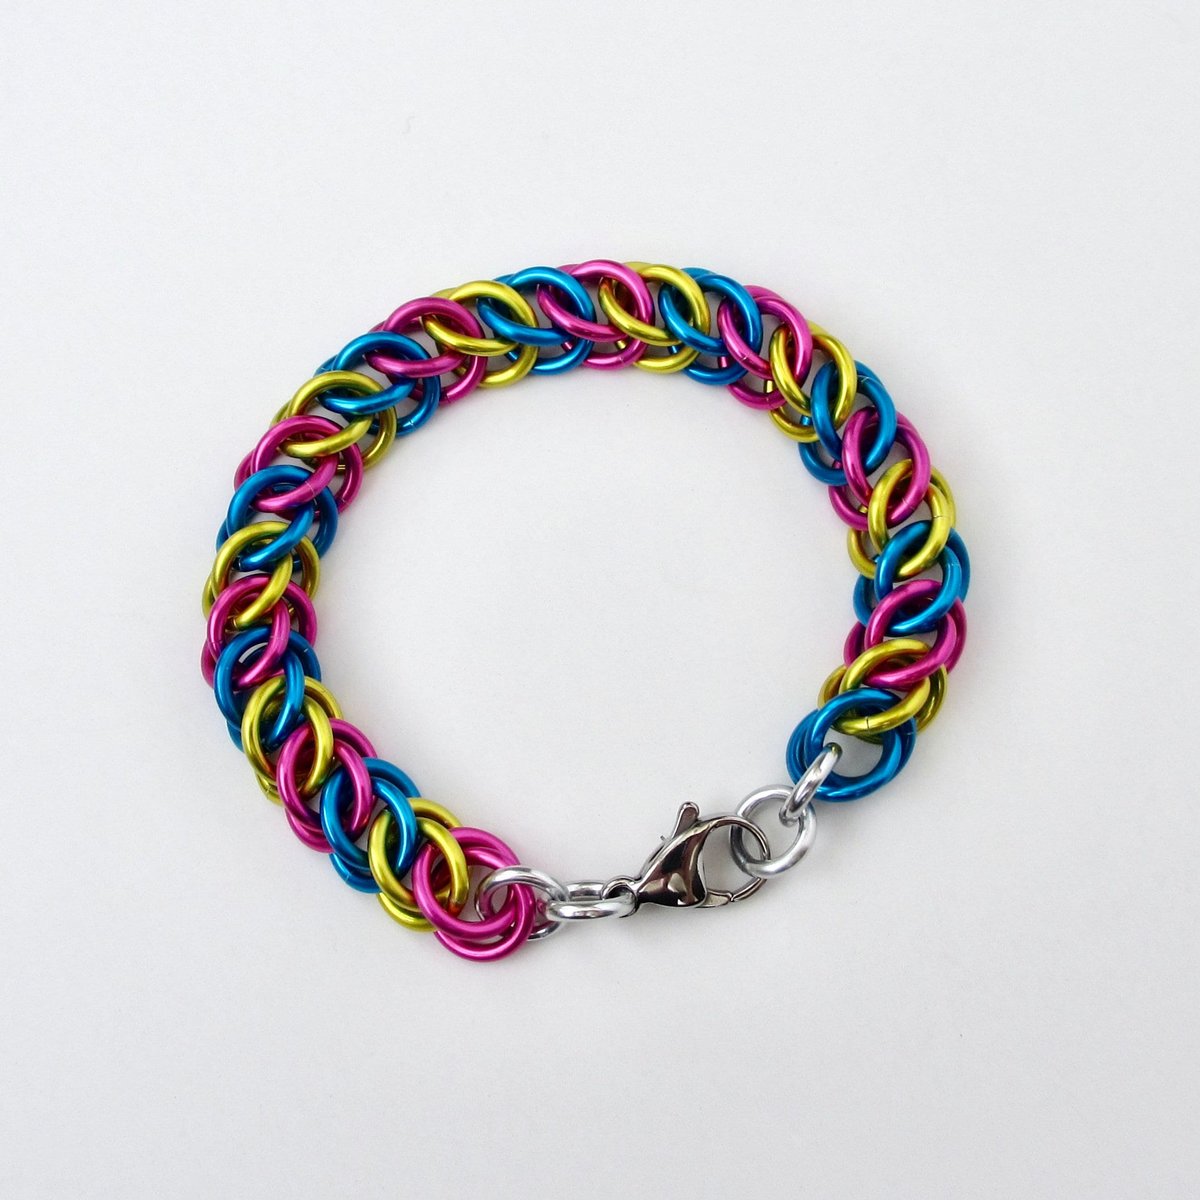 Pansexual pride flag bracelet, chainmail half Persian 3 in 1, handmade LGBTQ jewelry